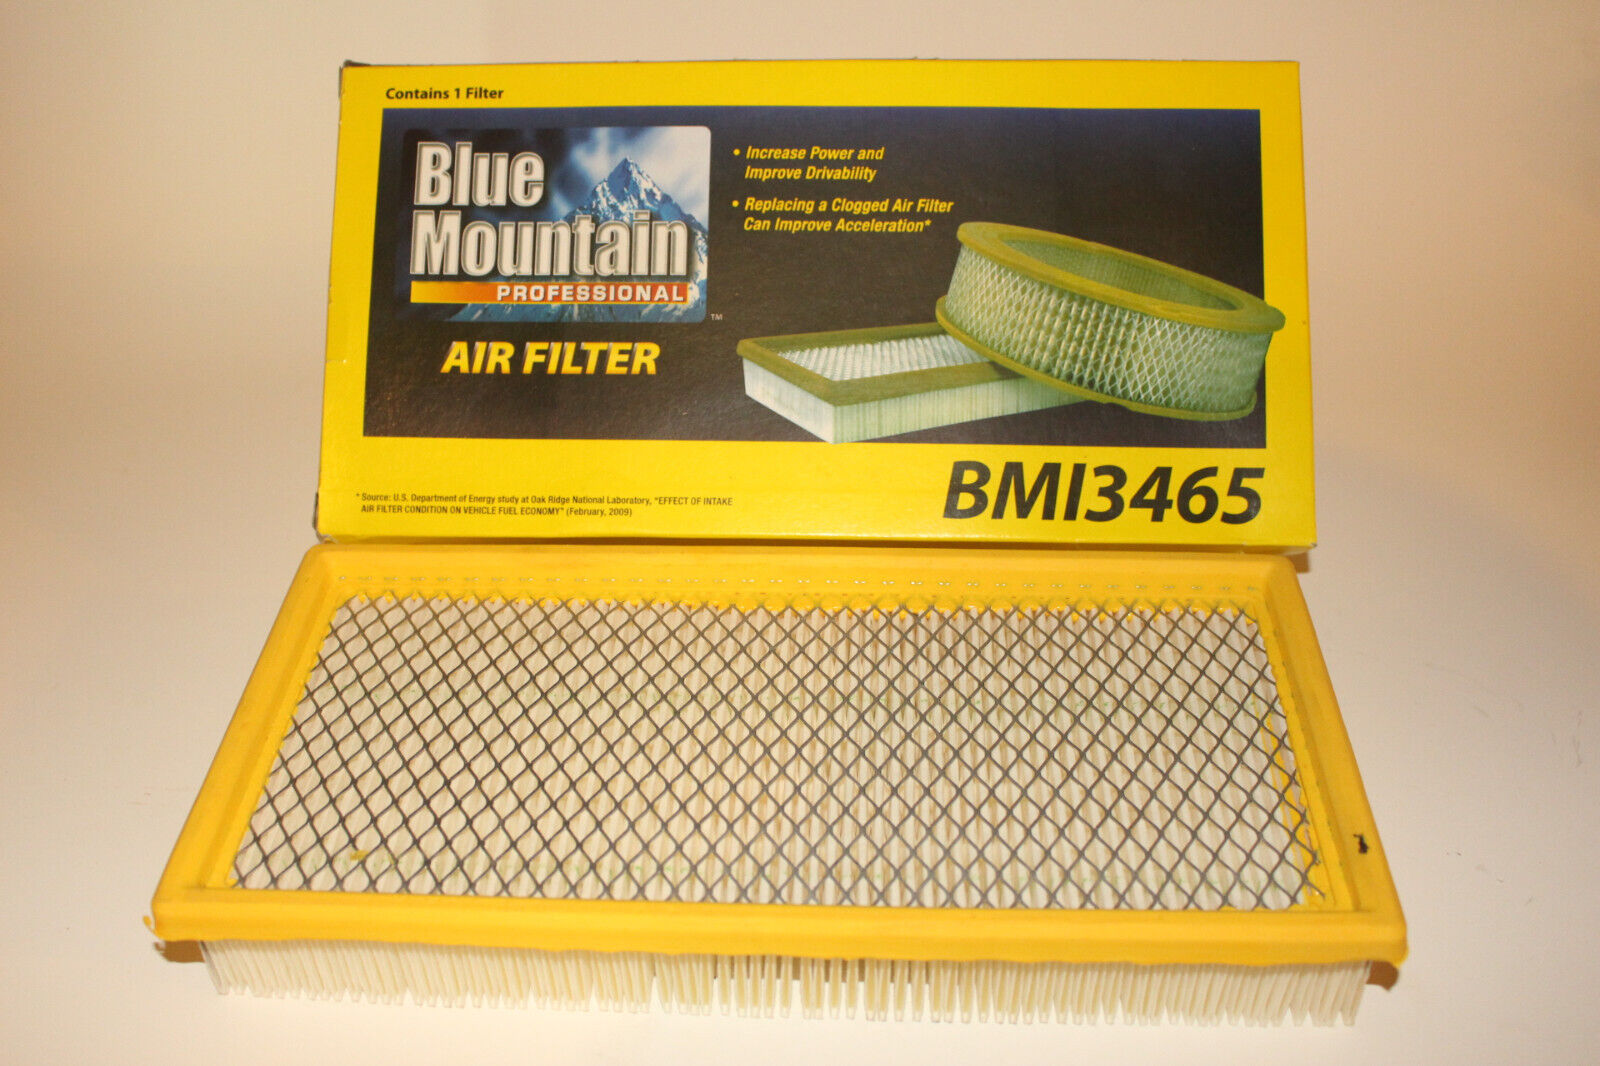 Blue Mountain Professional Air Filter 3465 / CA3660 - 1985-88 Ranger, Bronco II